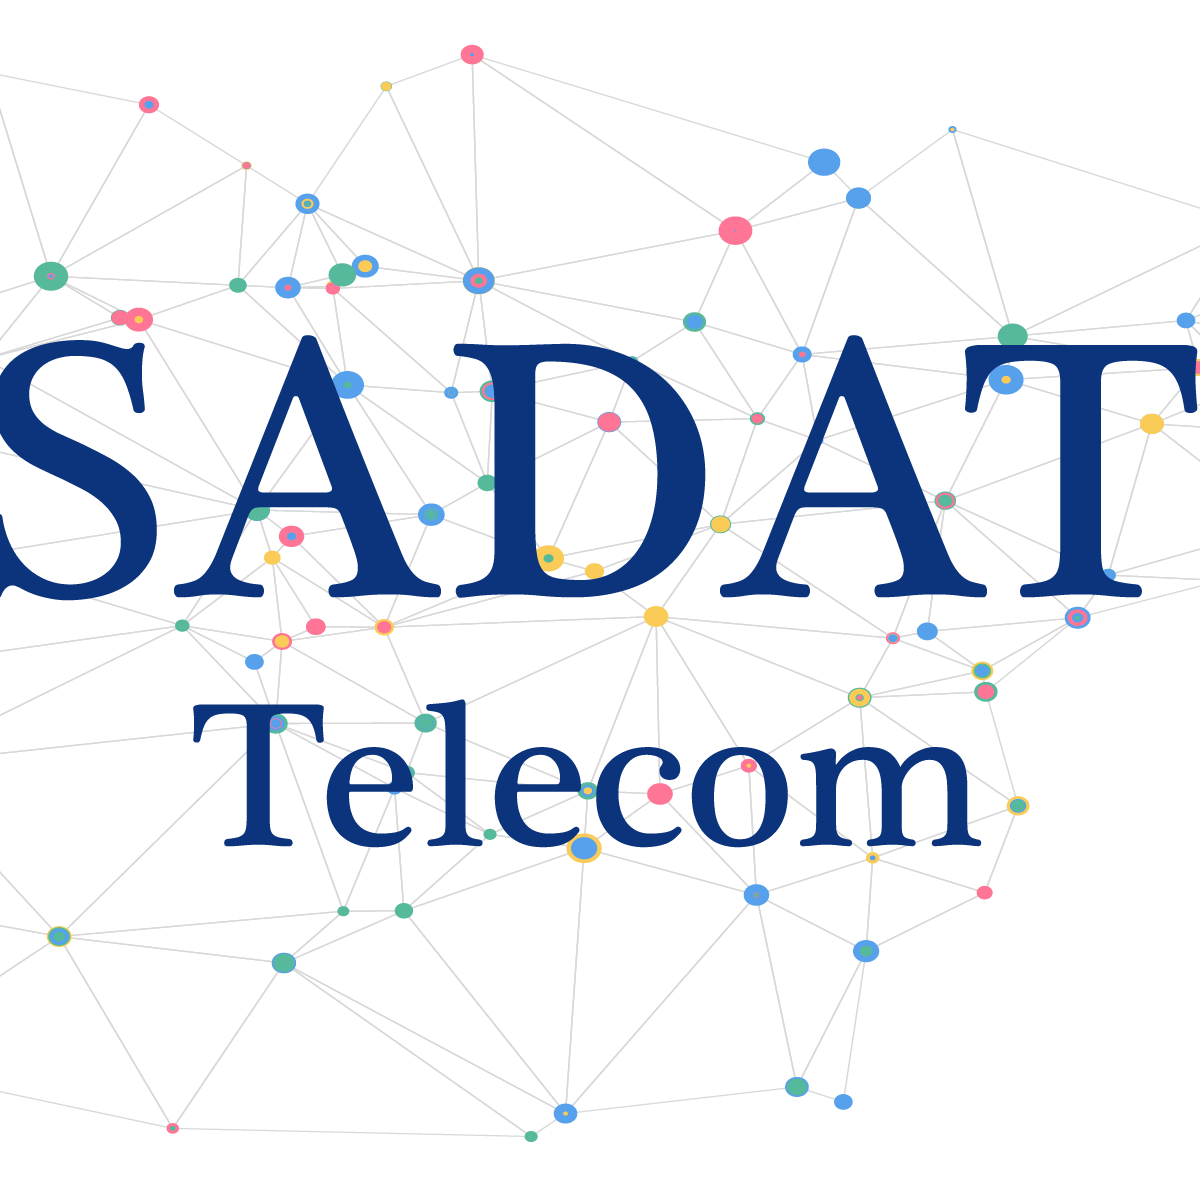 Sadat Telecom Isp